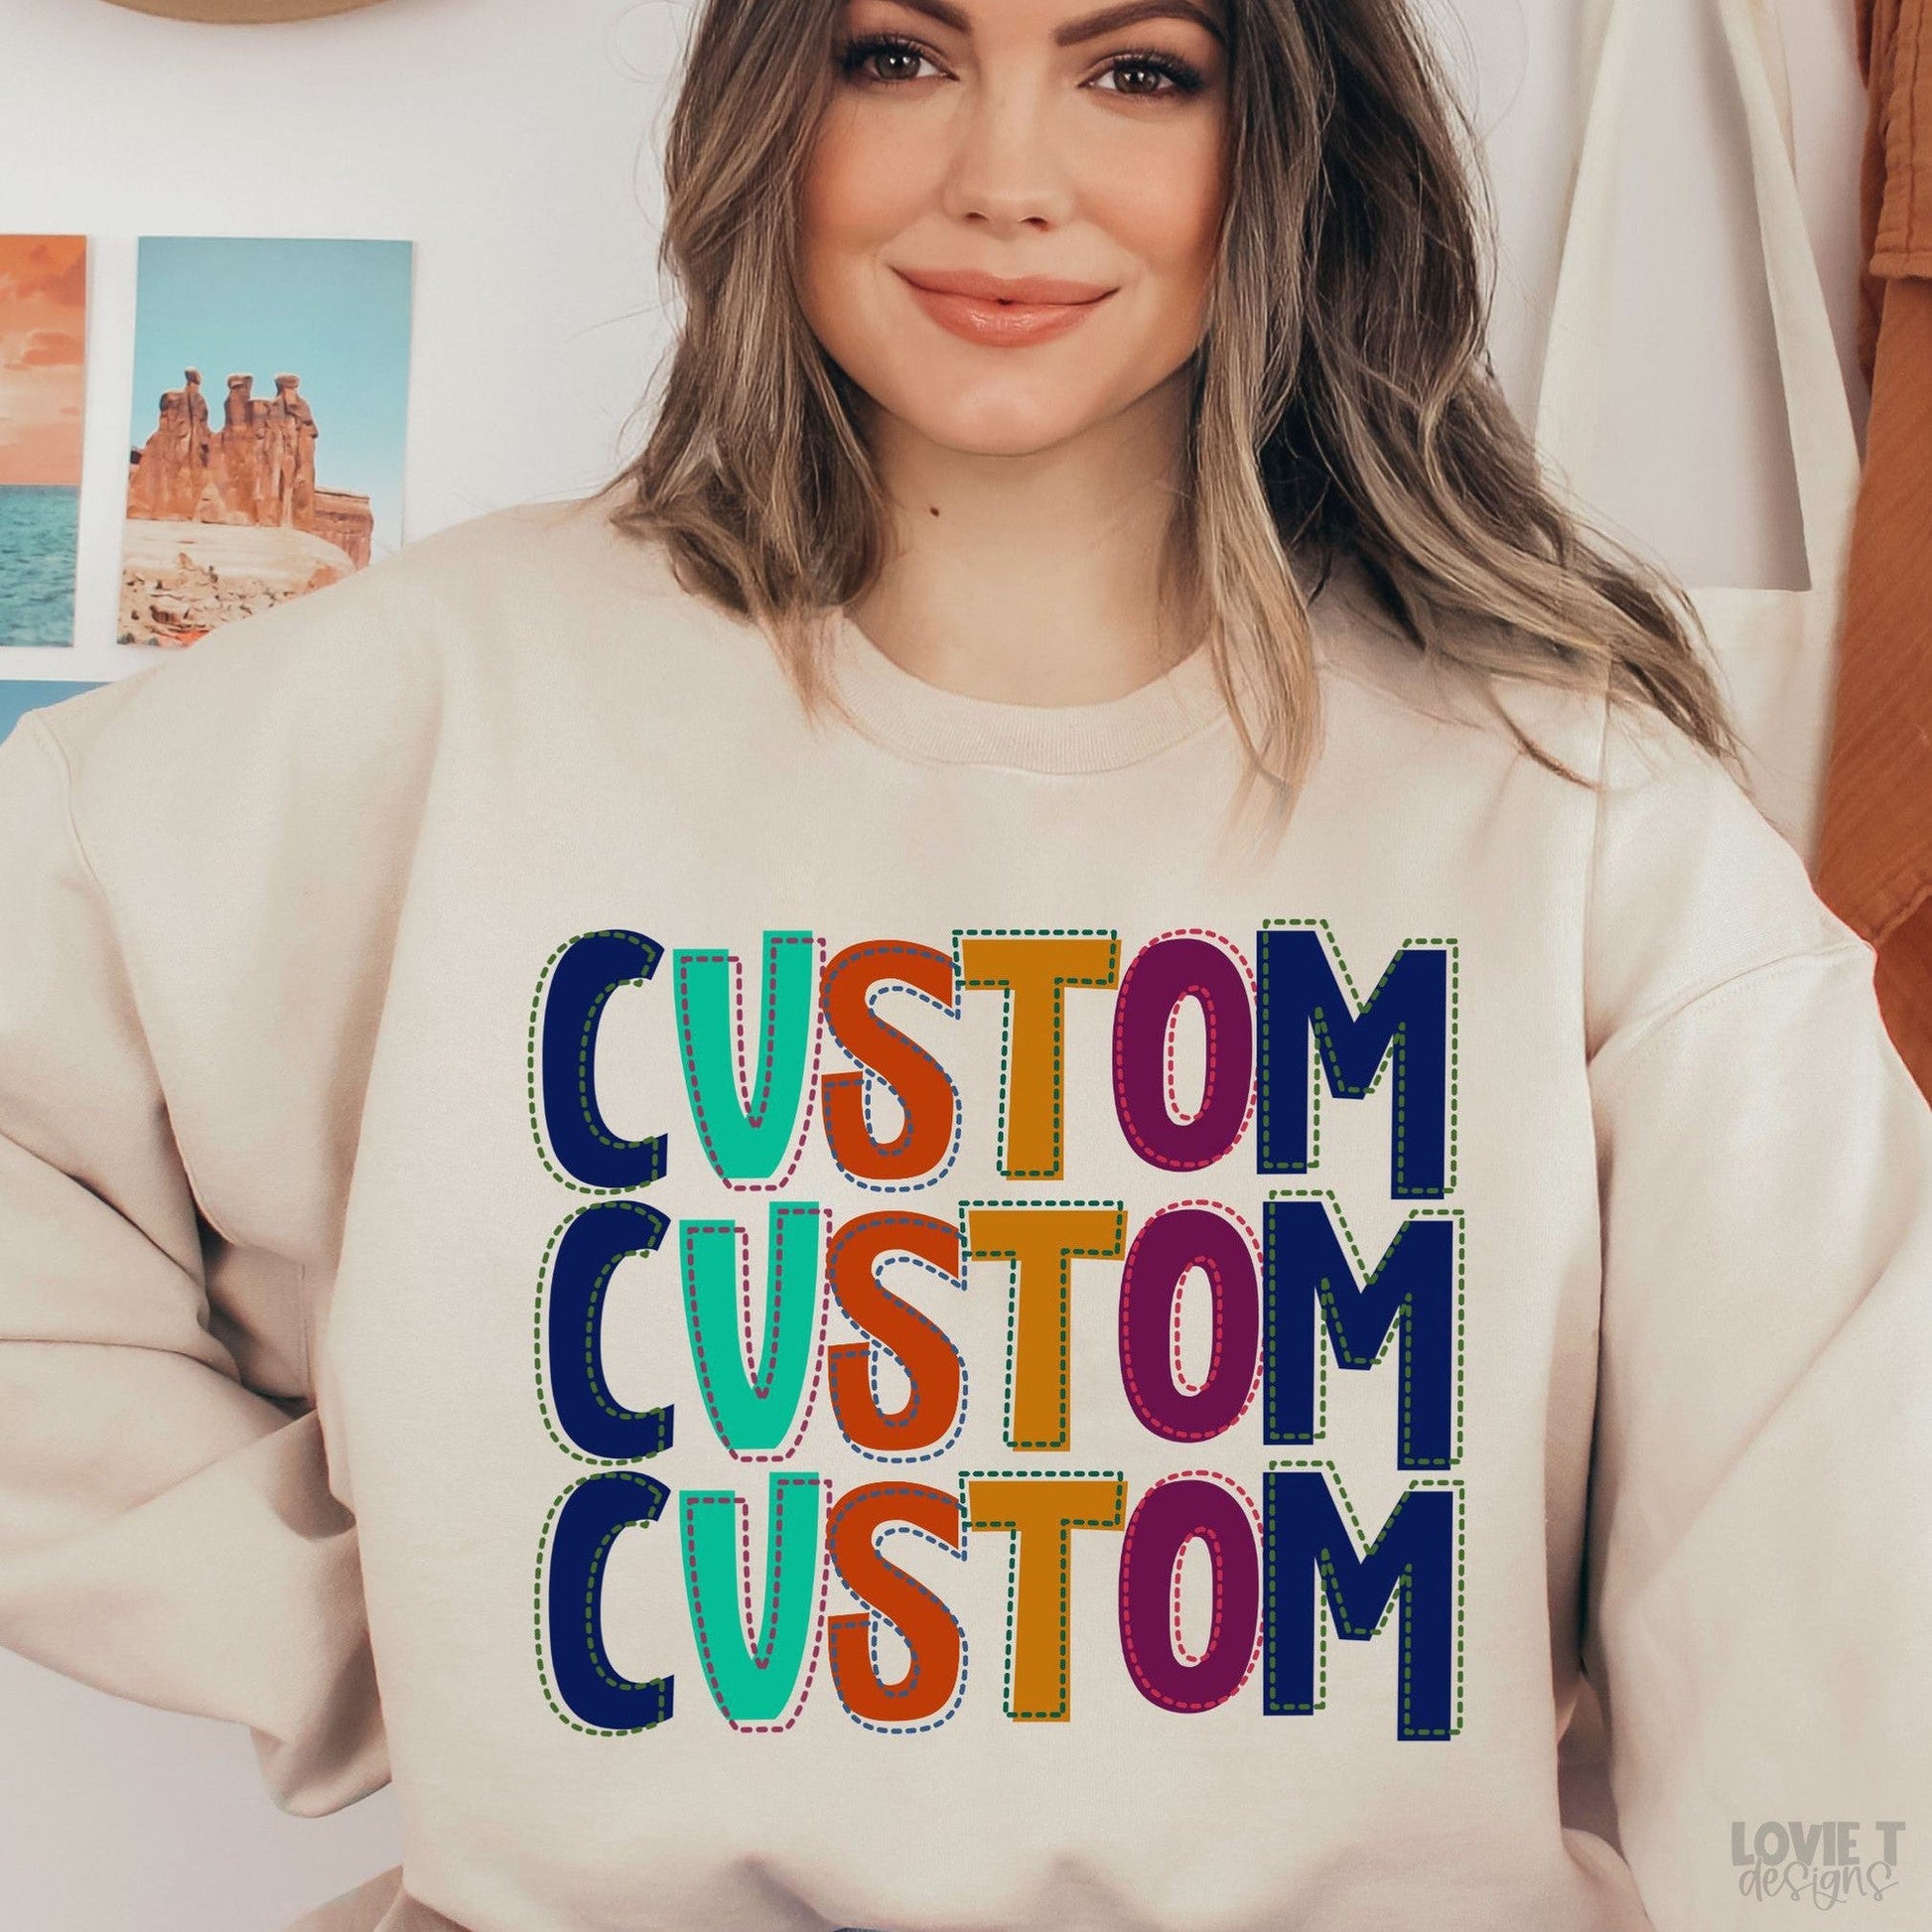 Custom Stitched